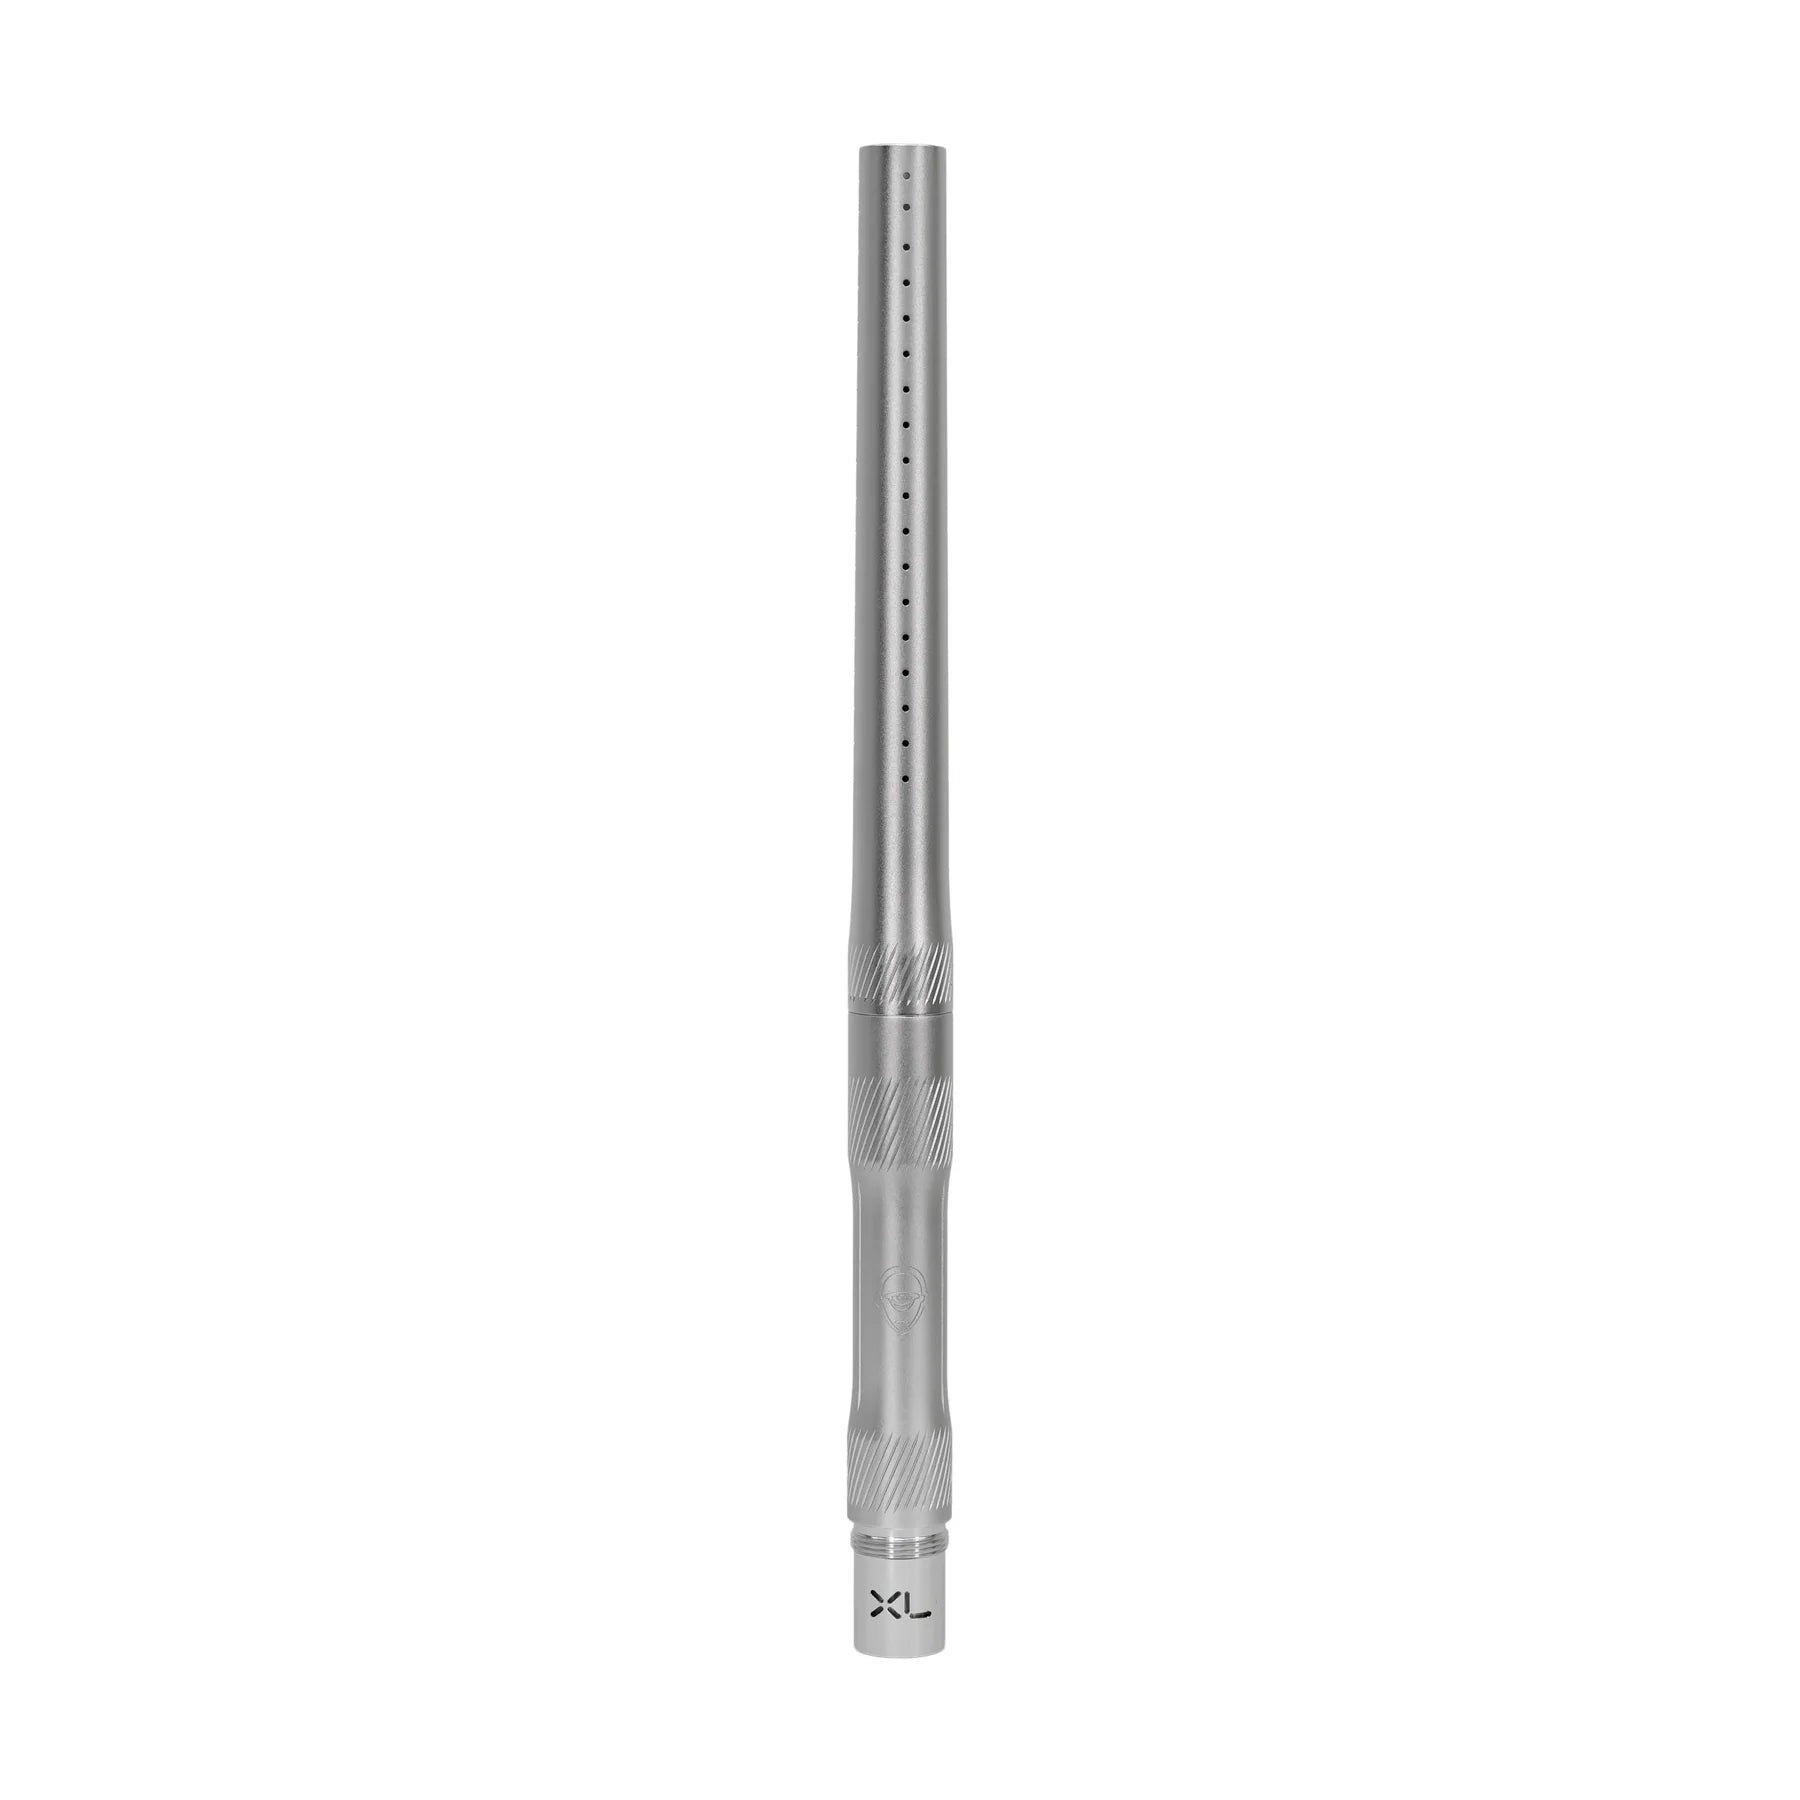 FREAK XL - White (Silver) Anodized - Full Barrel Kit - Autococker Thread - Aluminum Insert